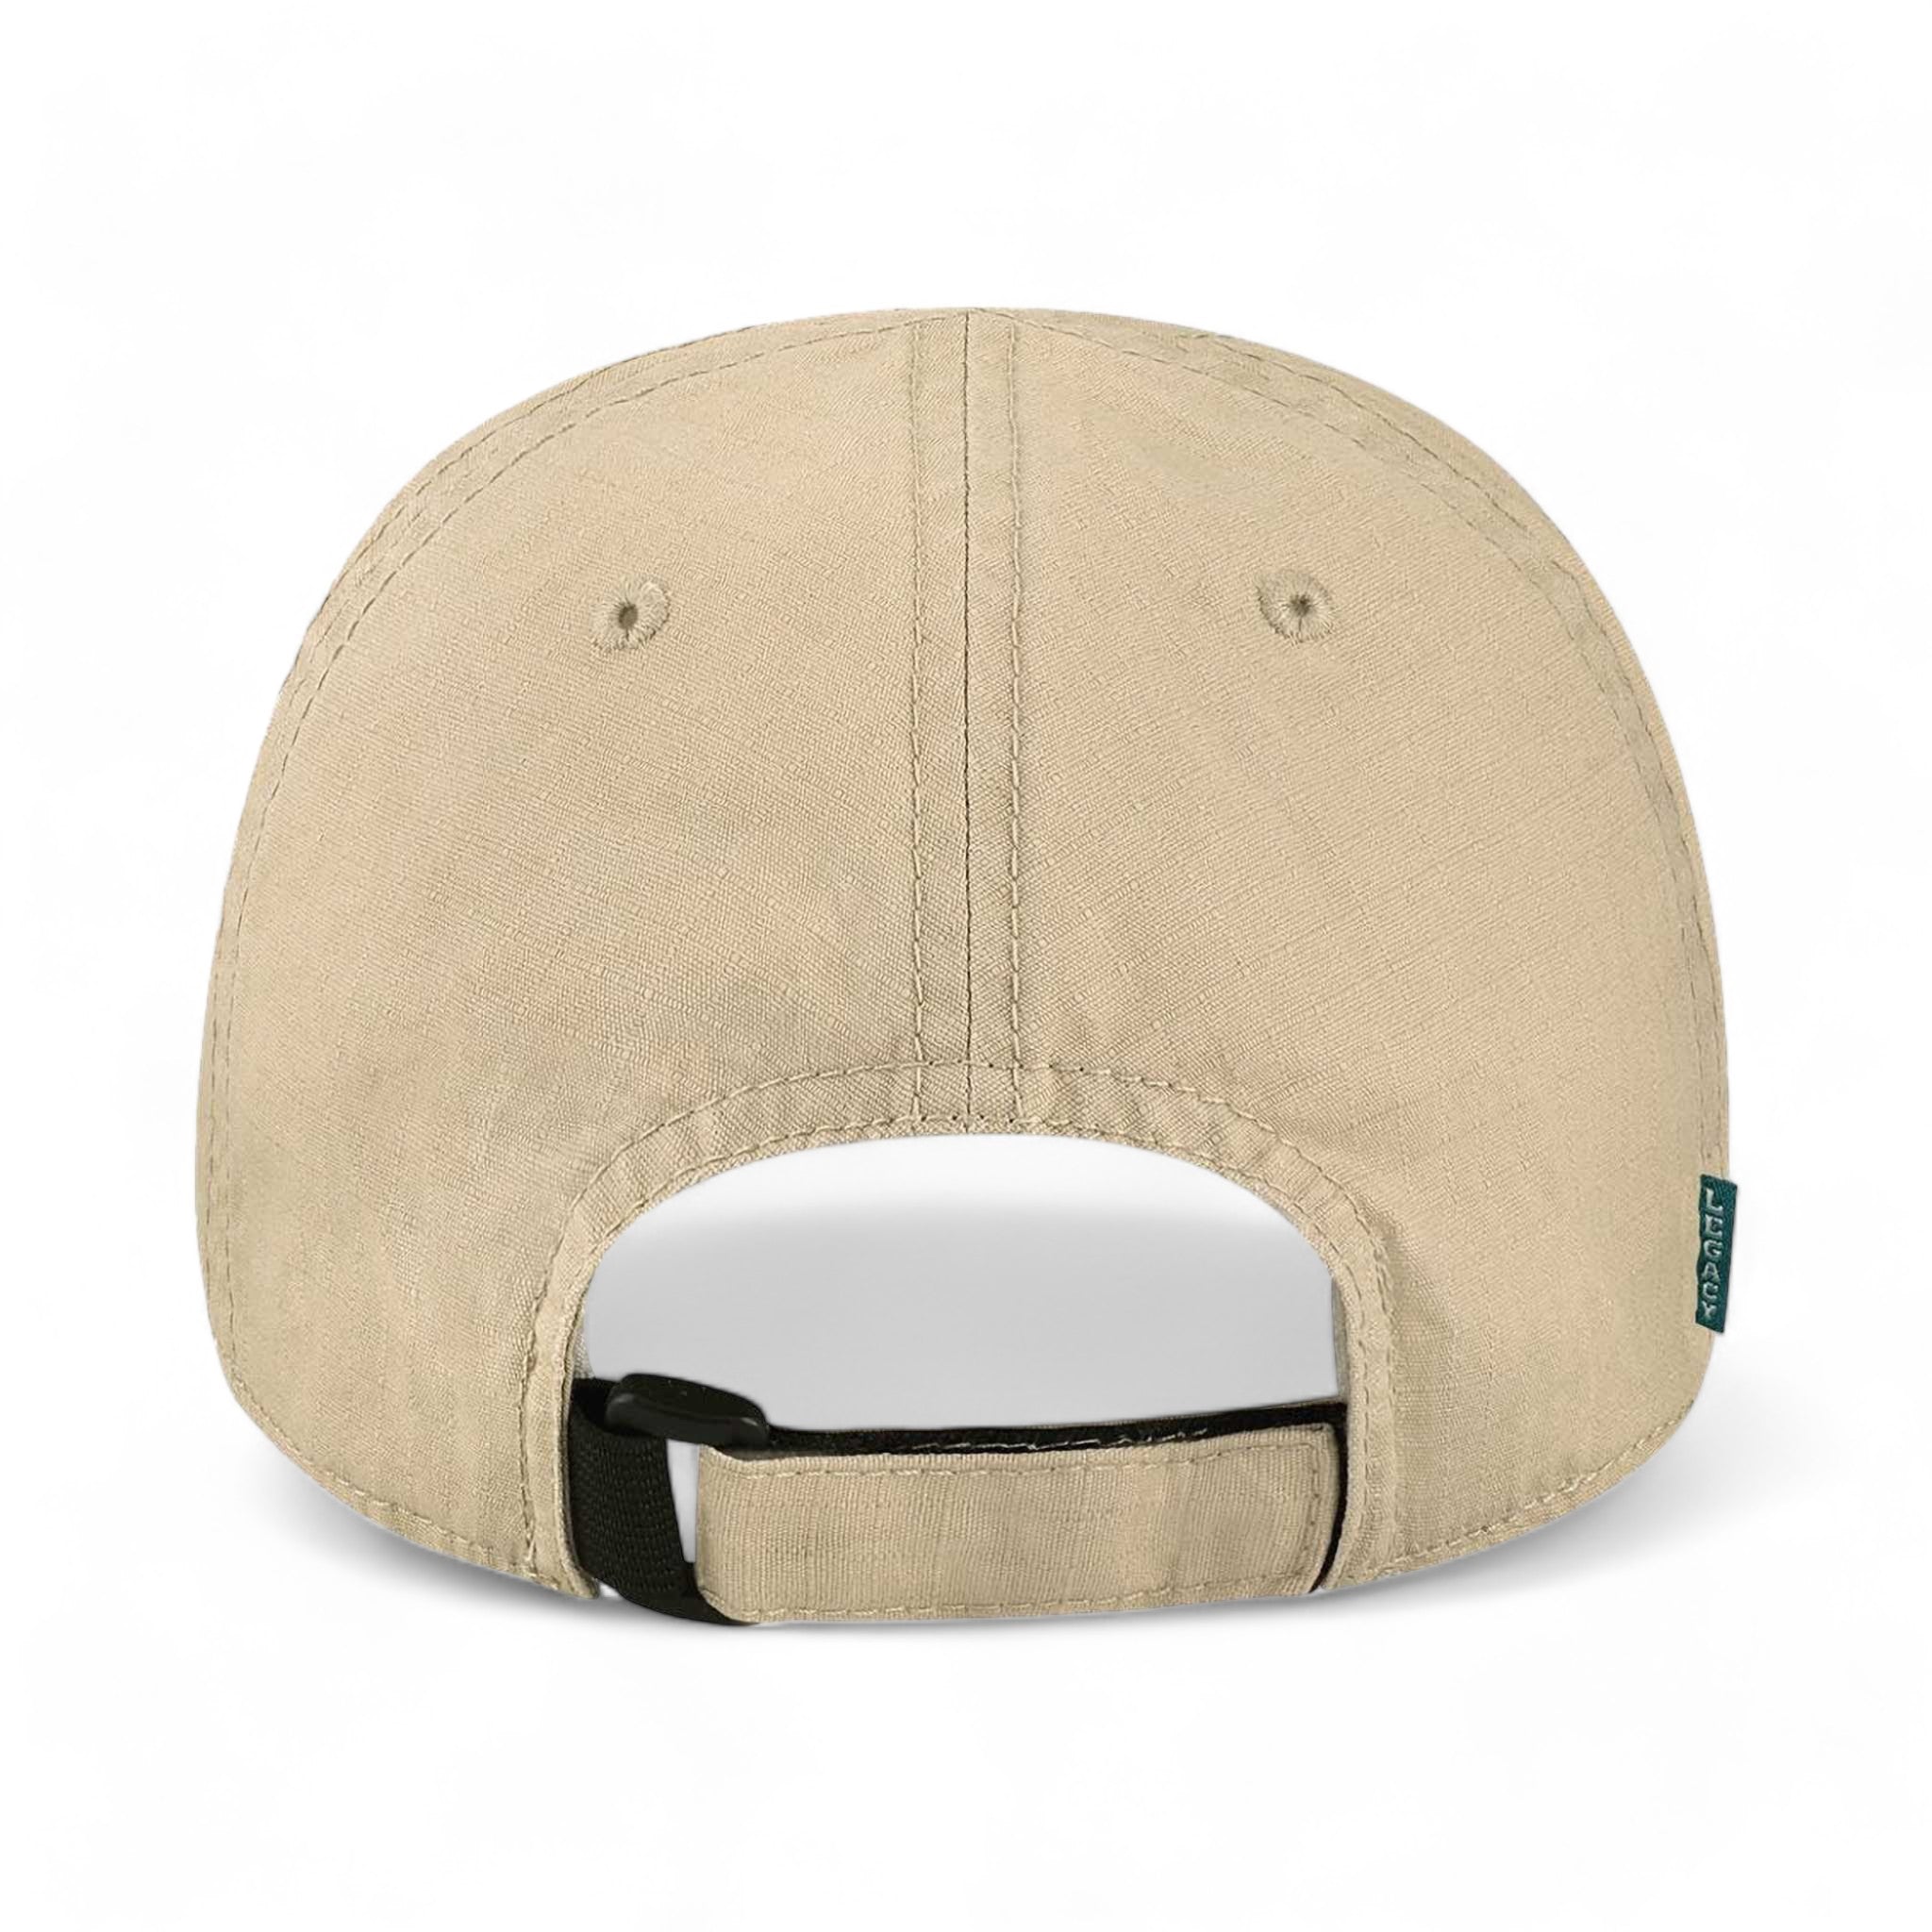 Back view of LEGACY TACT custom hat in khaki